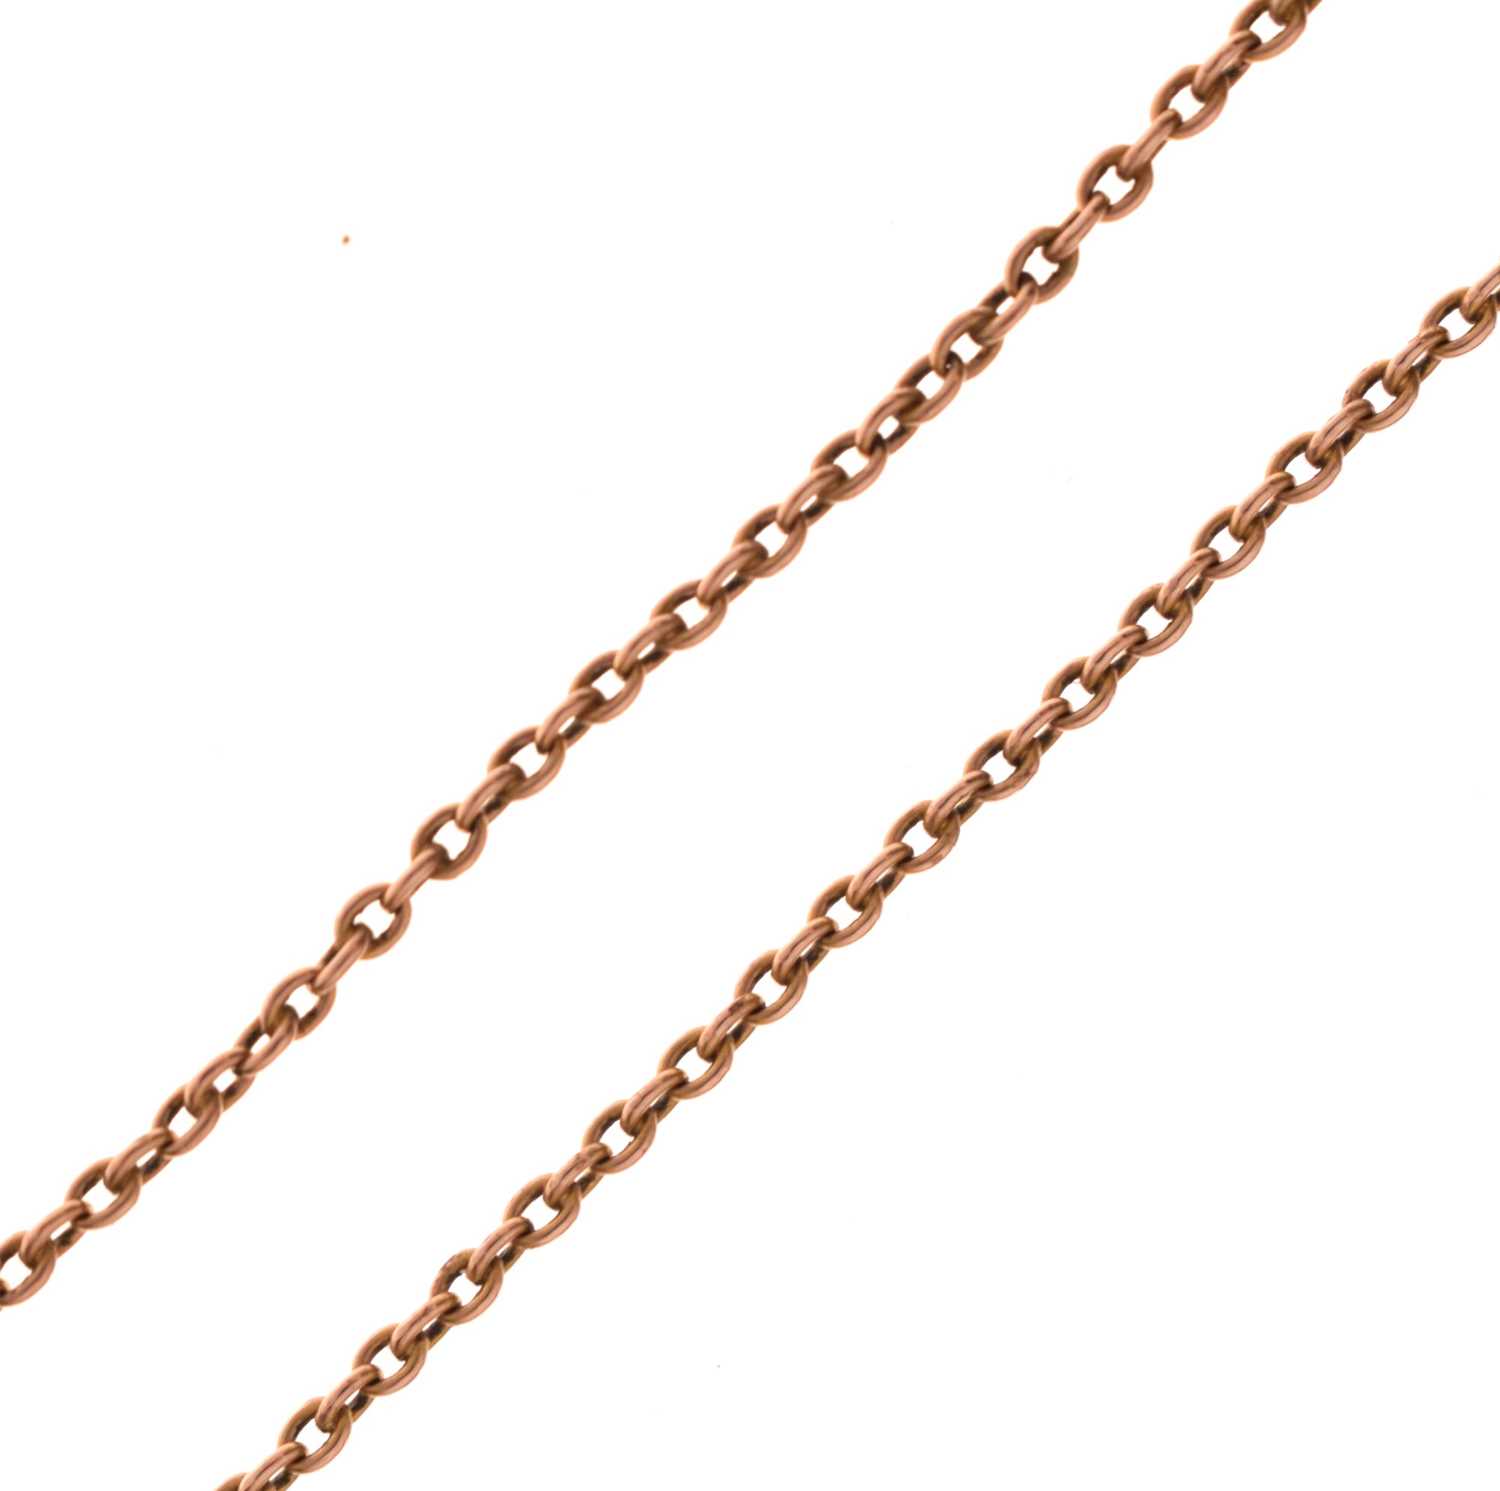 Late Victorian yellow metal (9ct) belcher link necklace